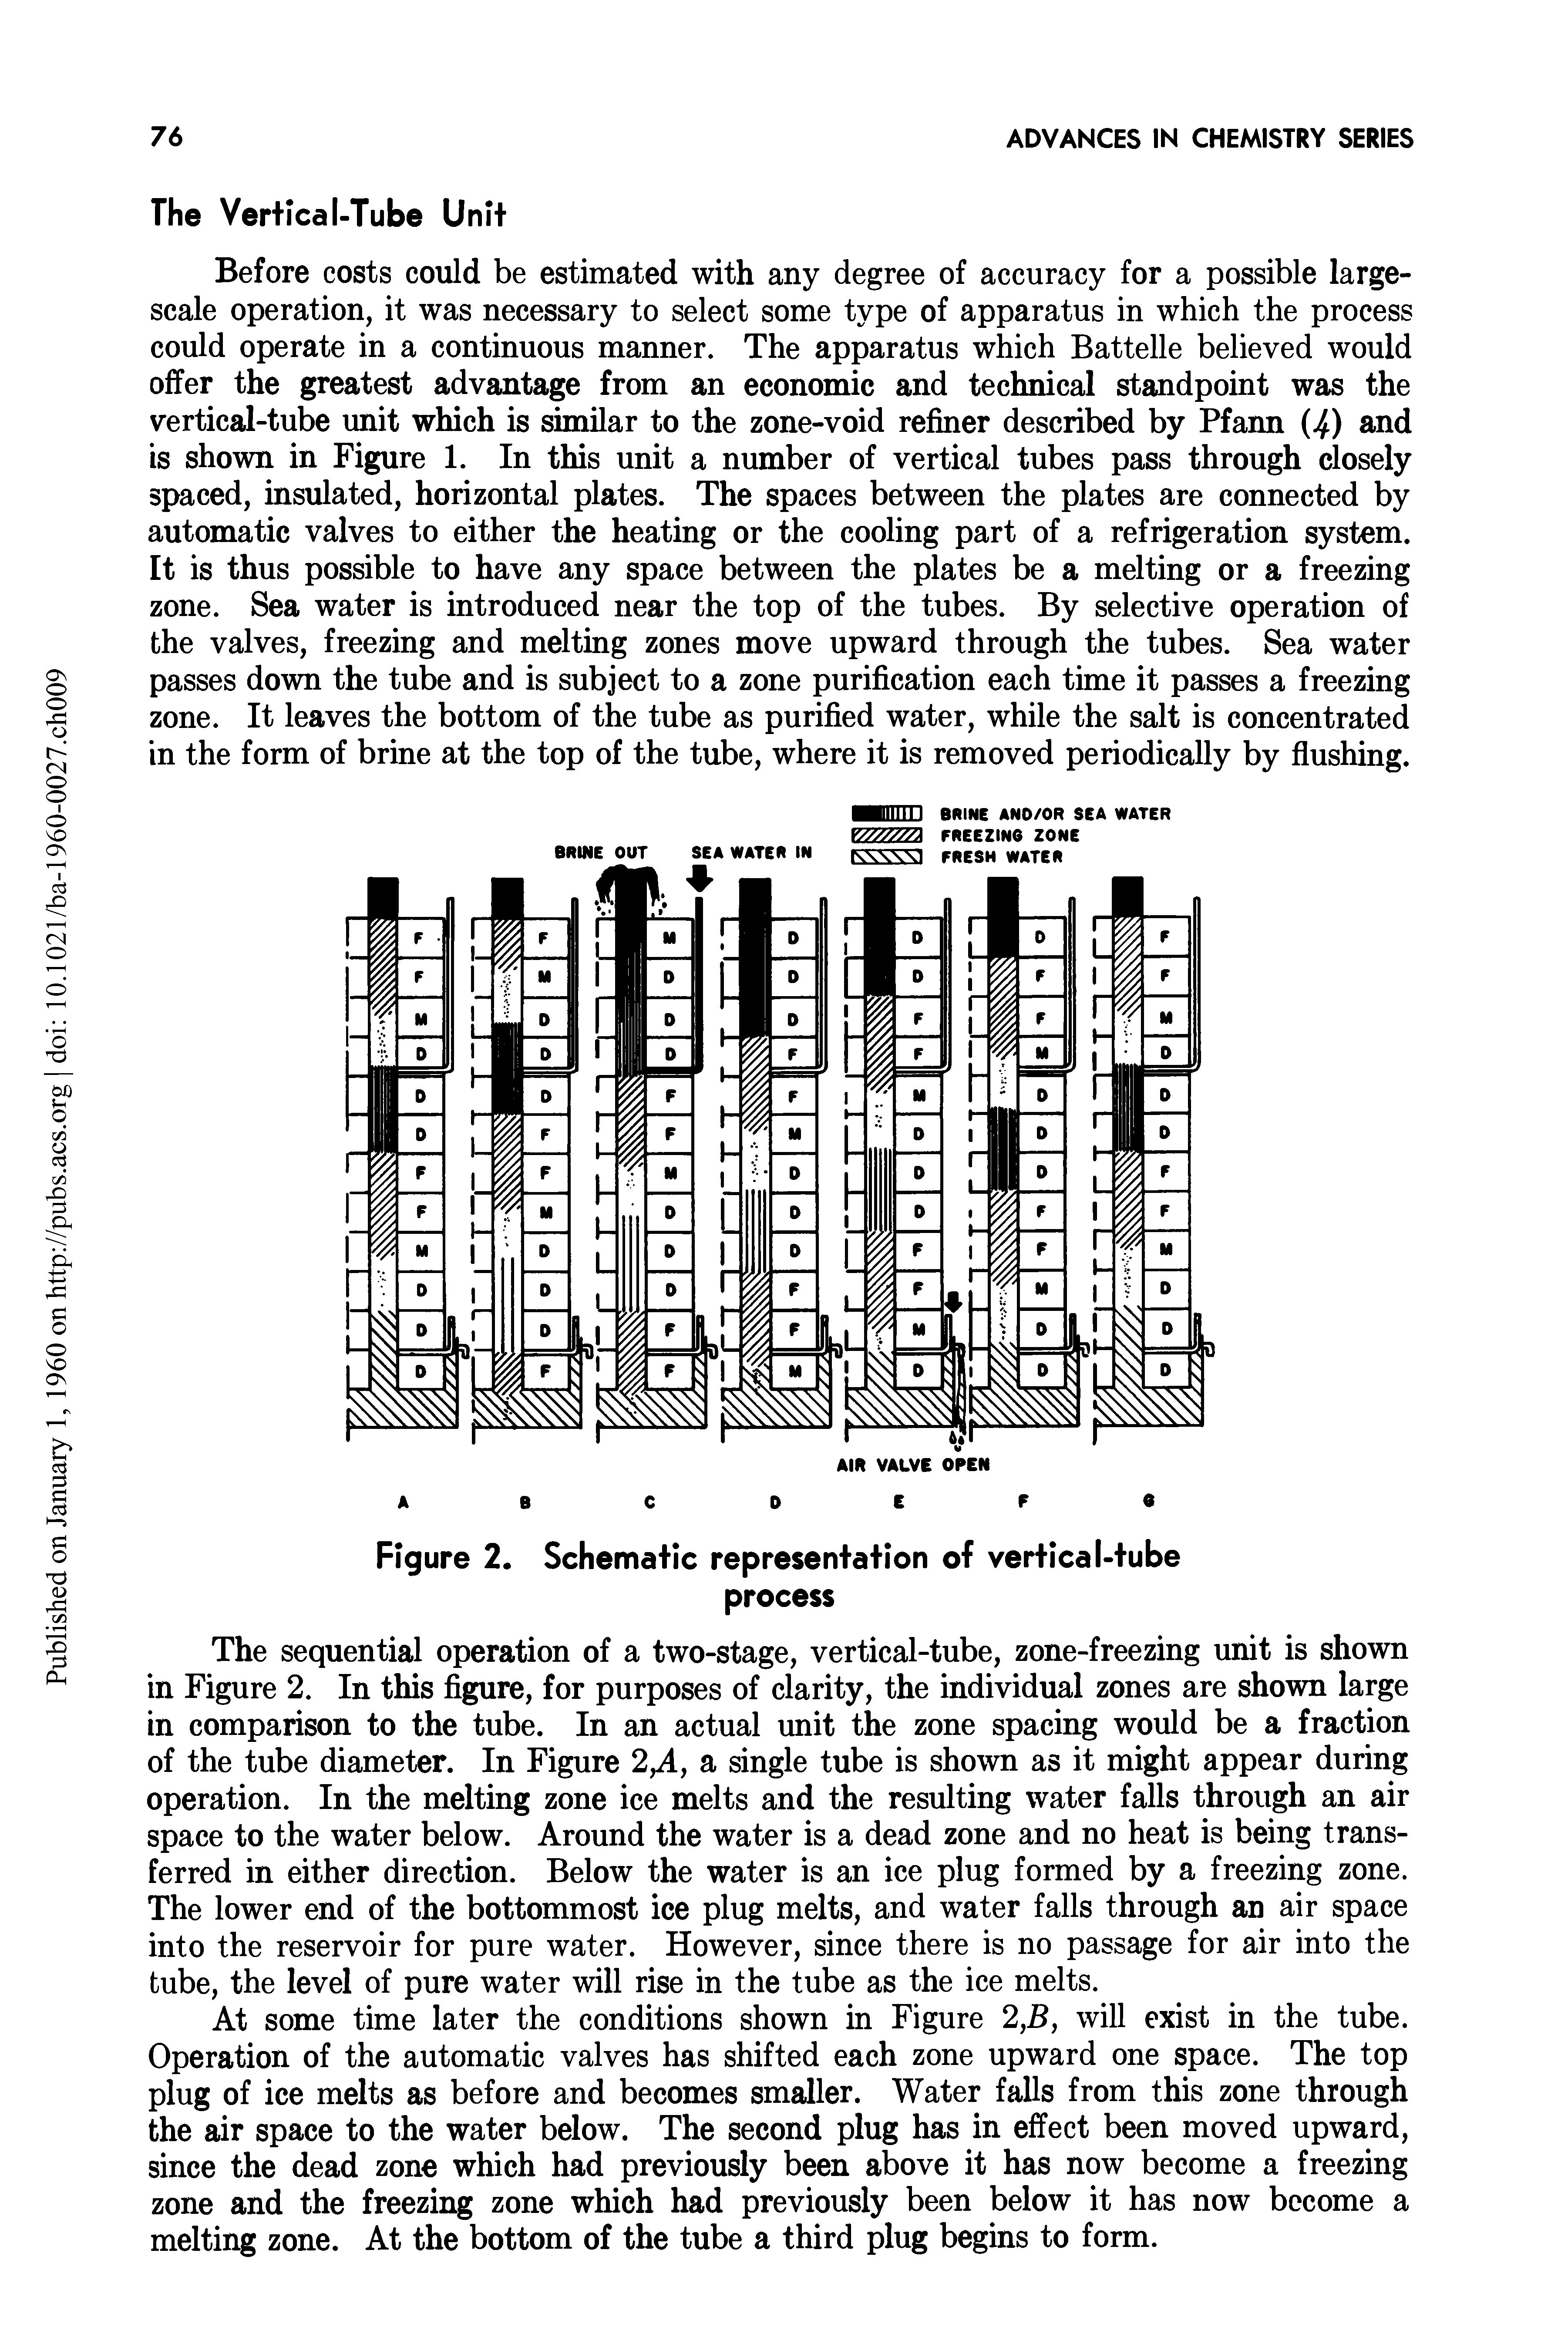 Figure 2. Schematic representation of vertical-tube process...